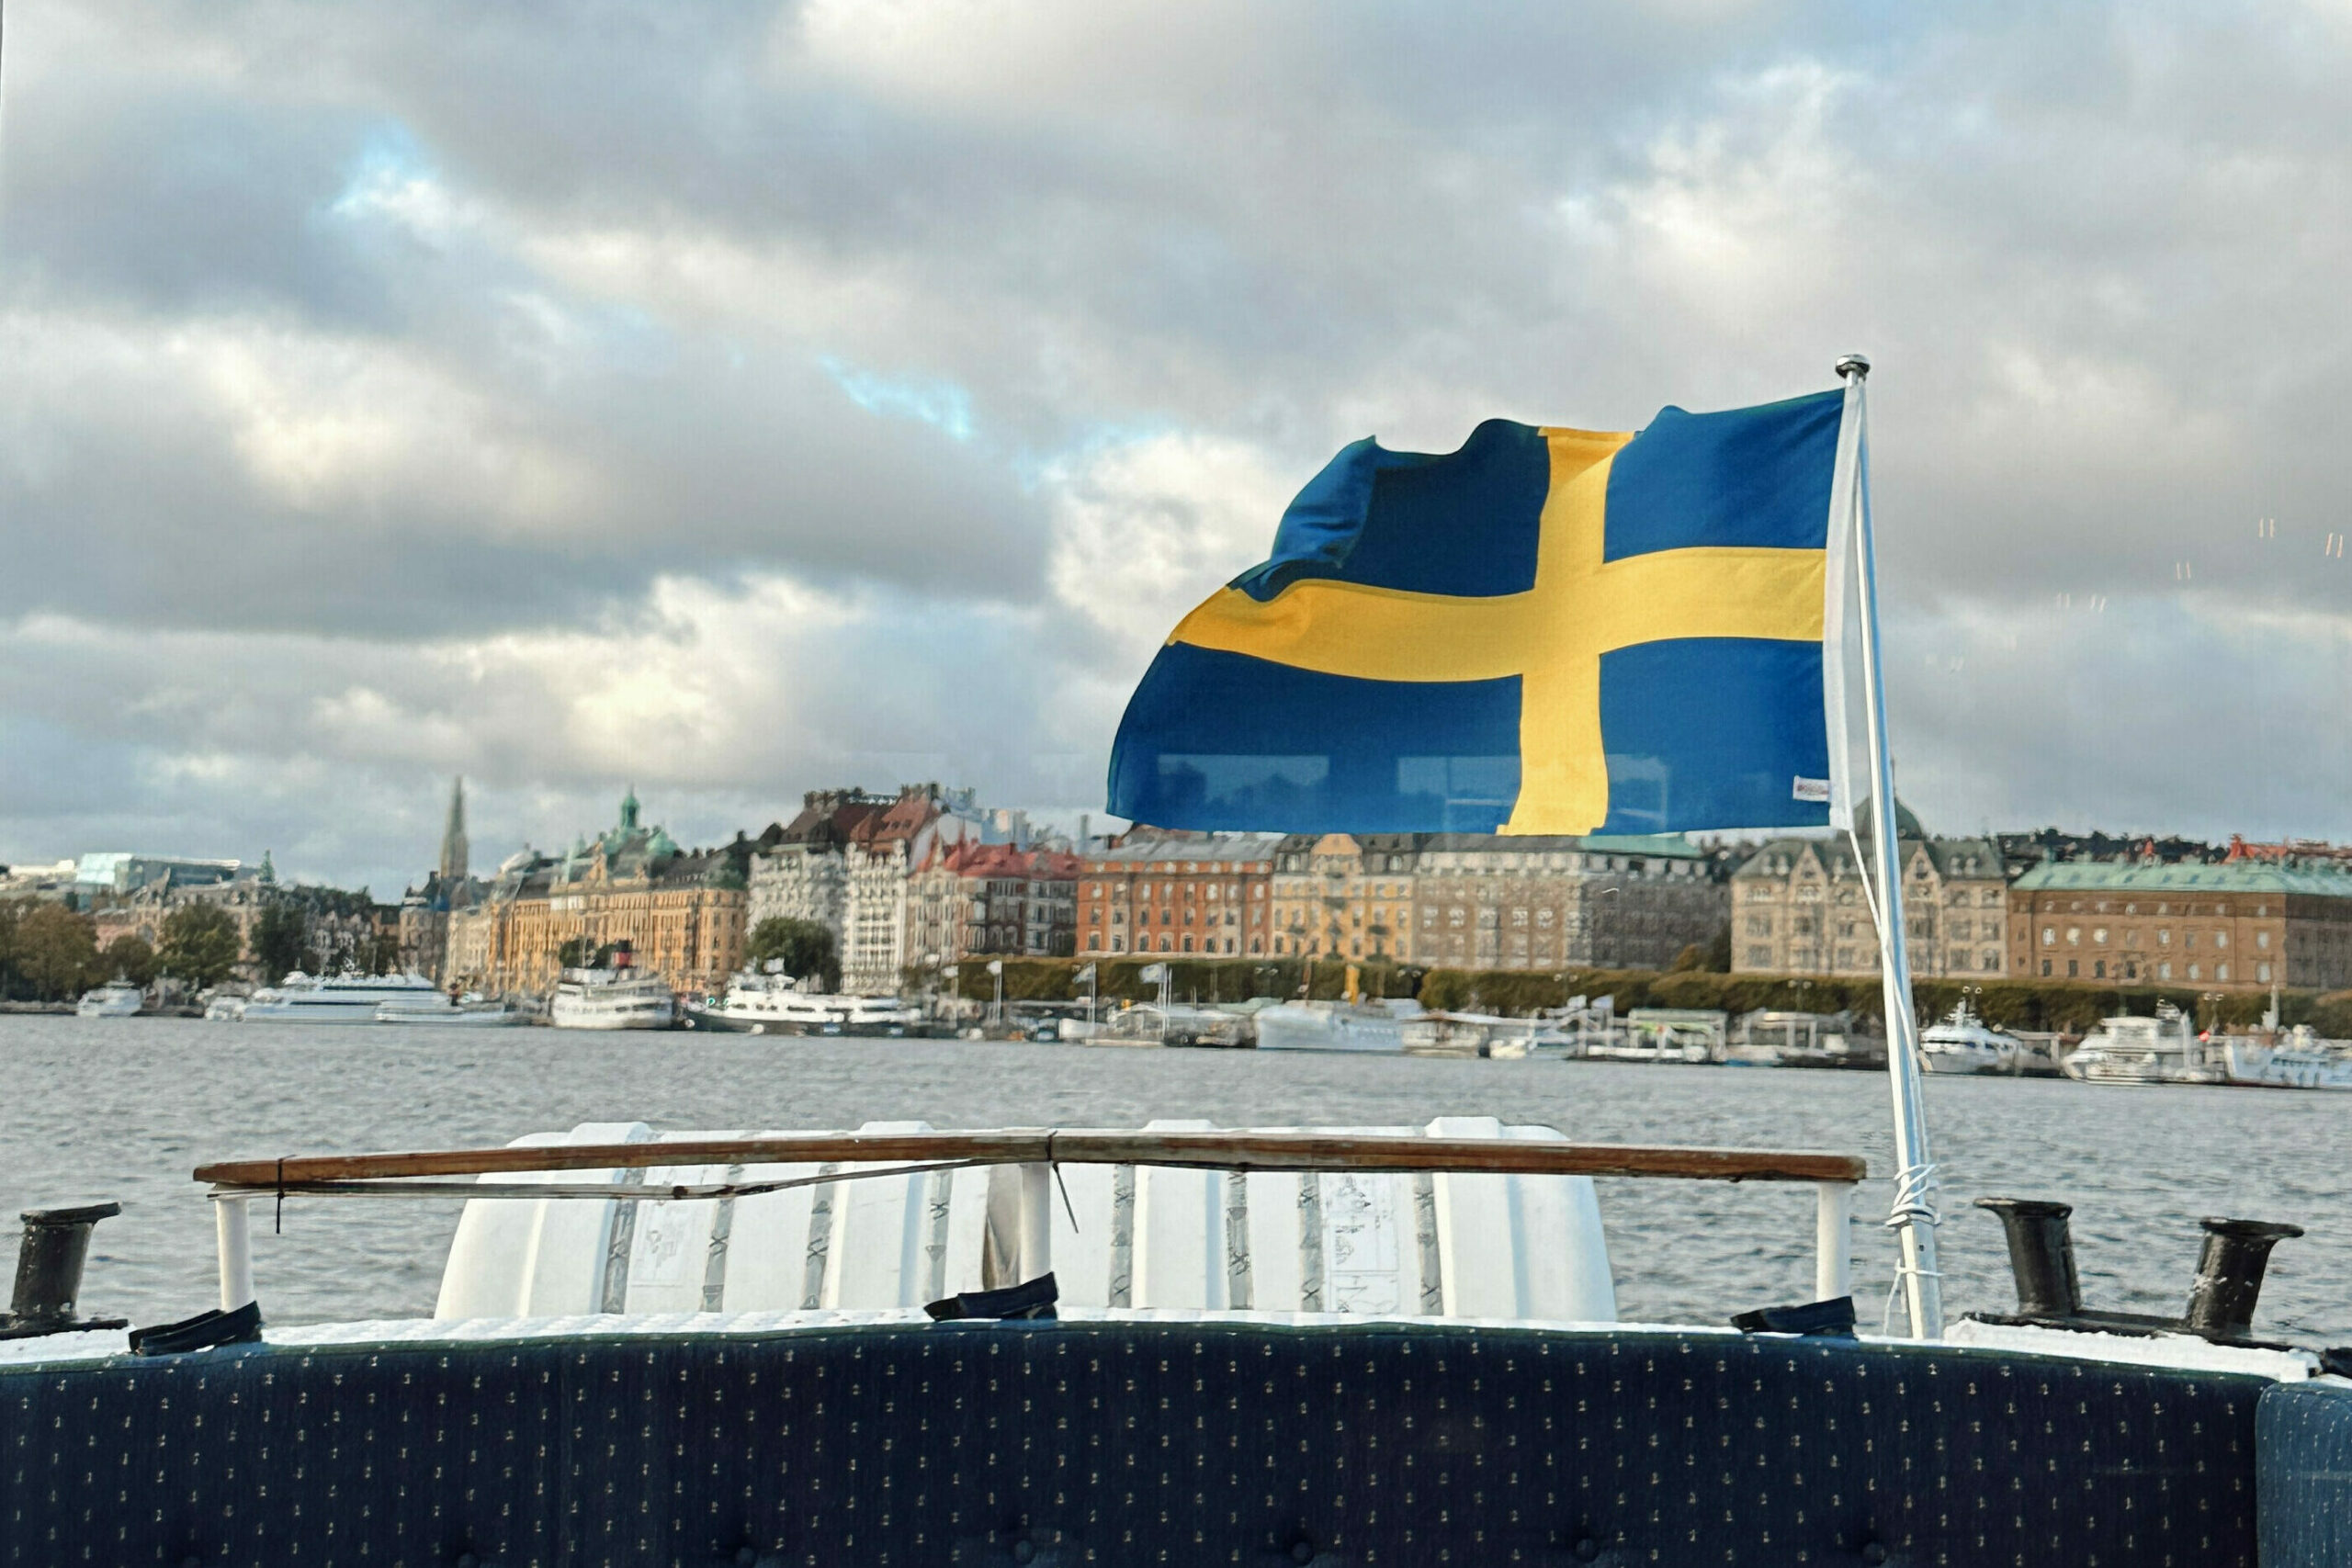 Svensk flagg som veier i vinden på baksiden av en båt. Foto